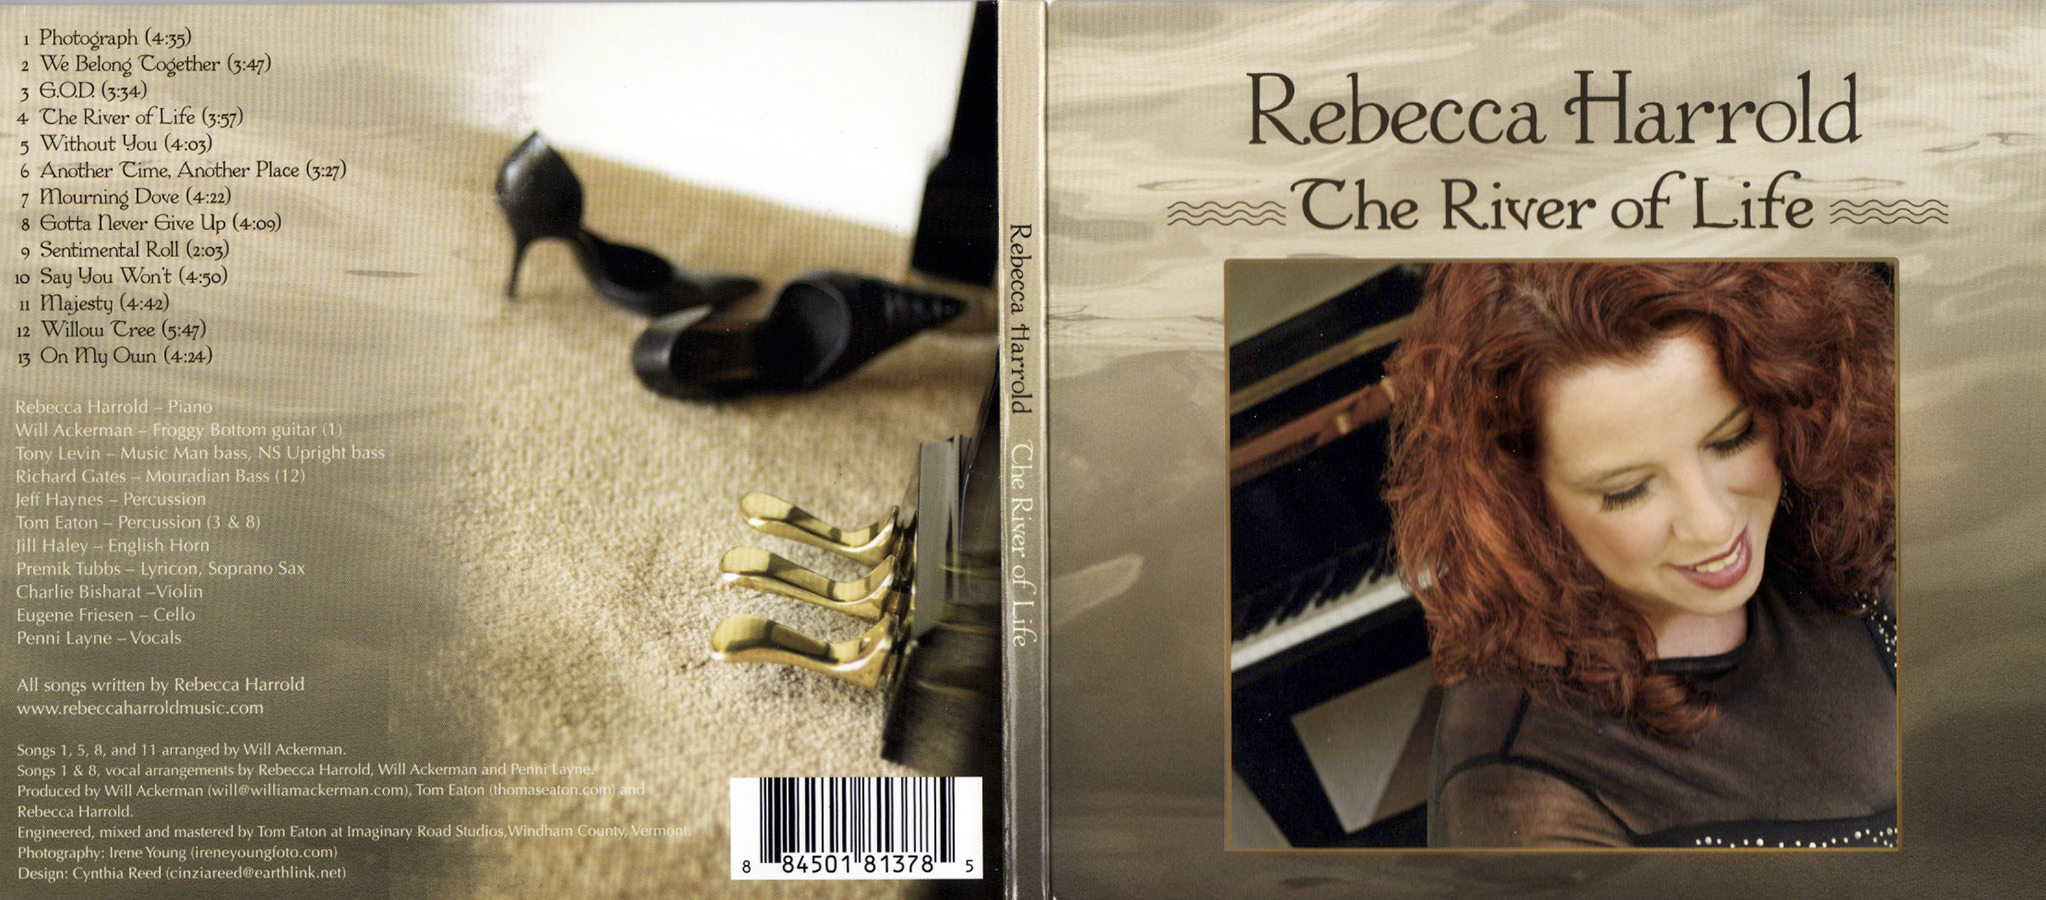 Rebecca Harrold, The RIver of Life